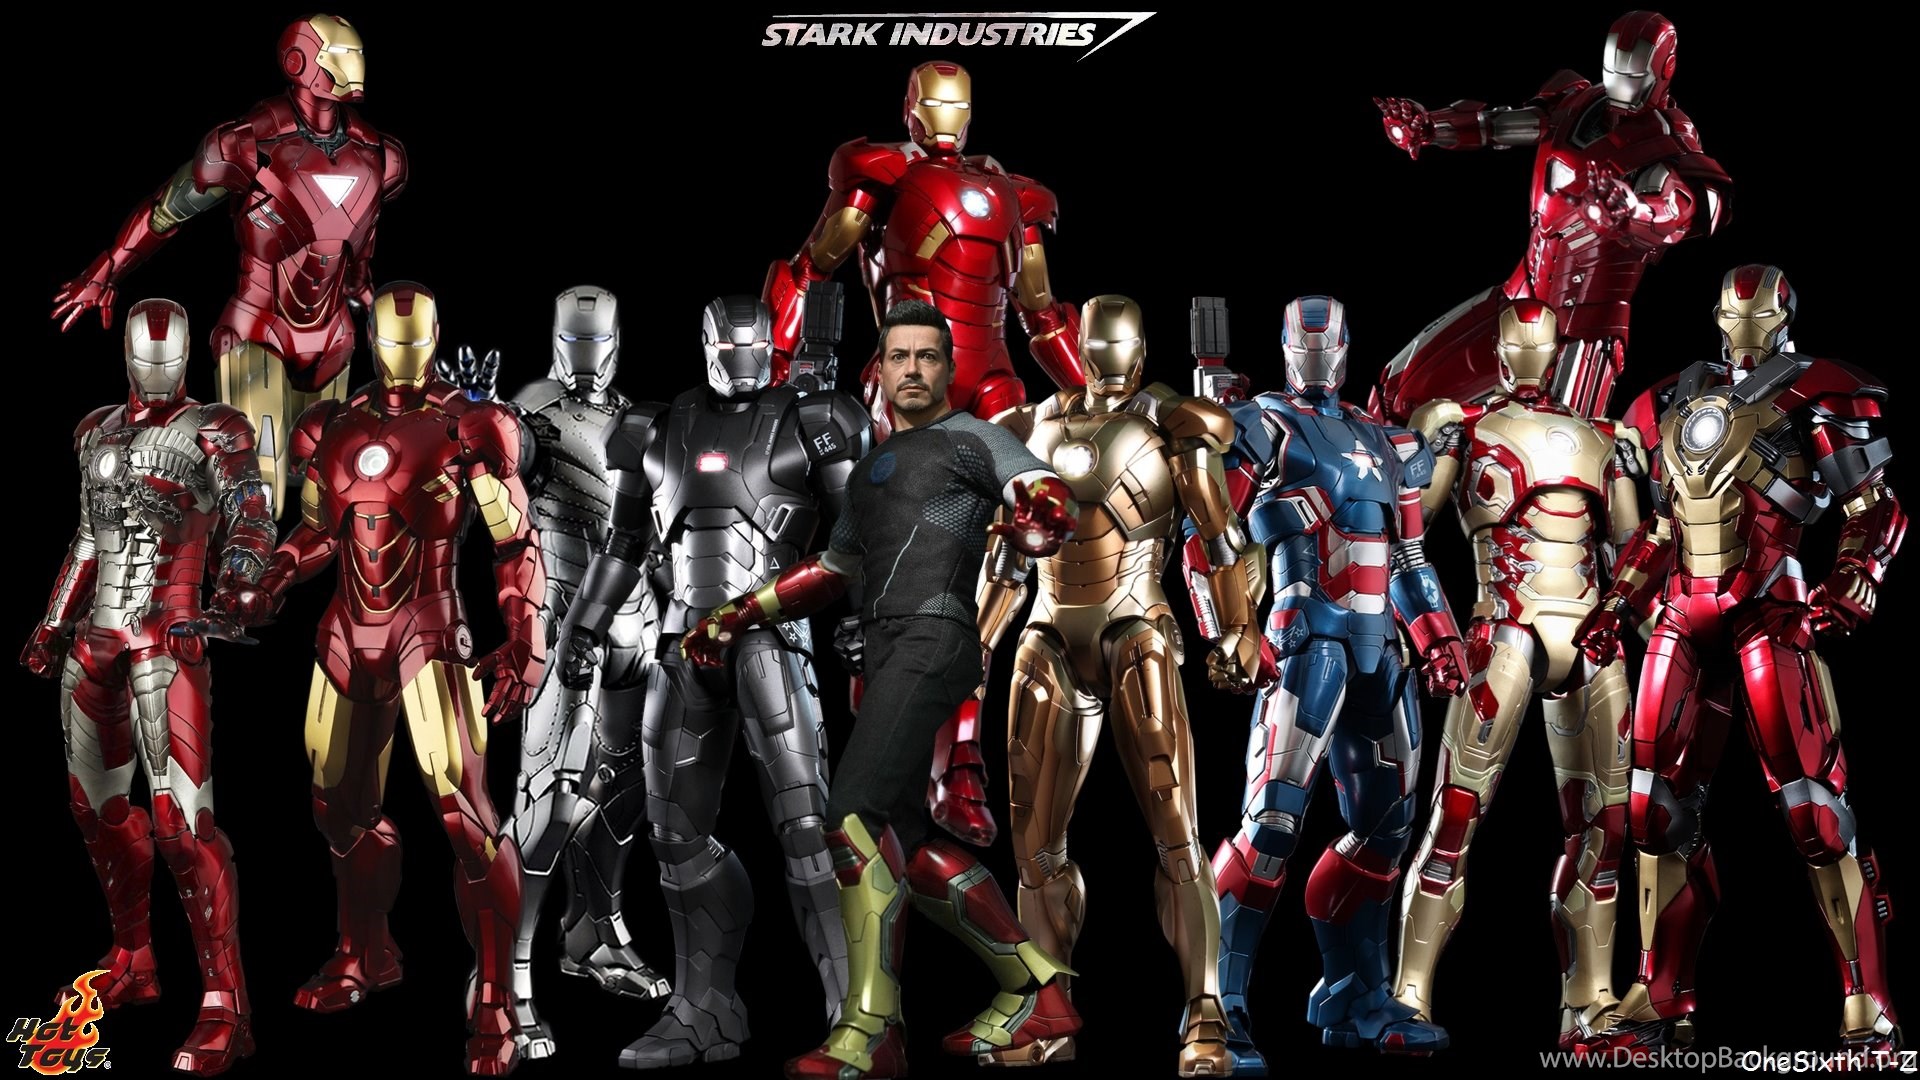 Hot Toys Stark Industries Iron Man Hd Wallpapers Desktop Background